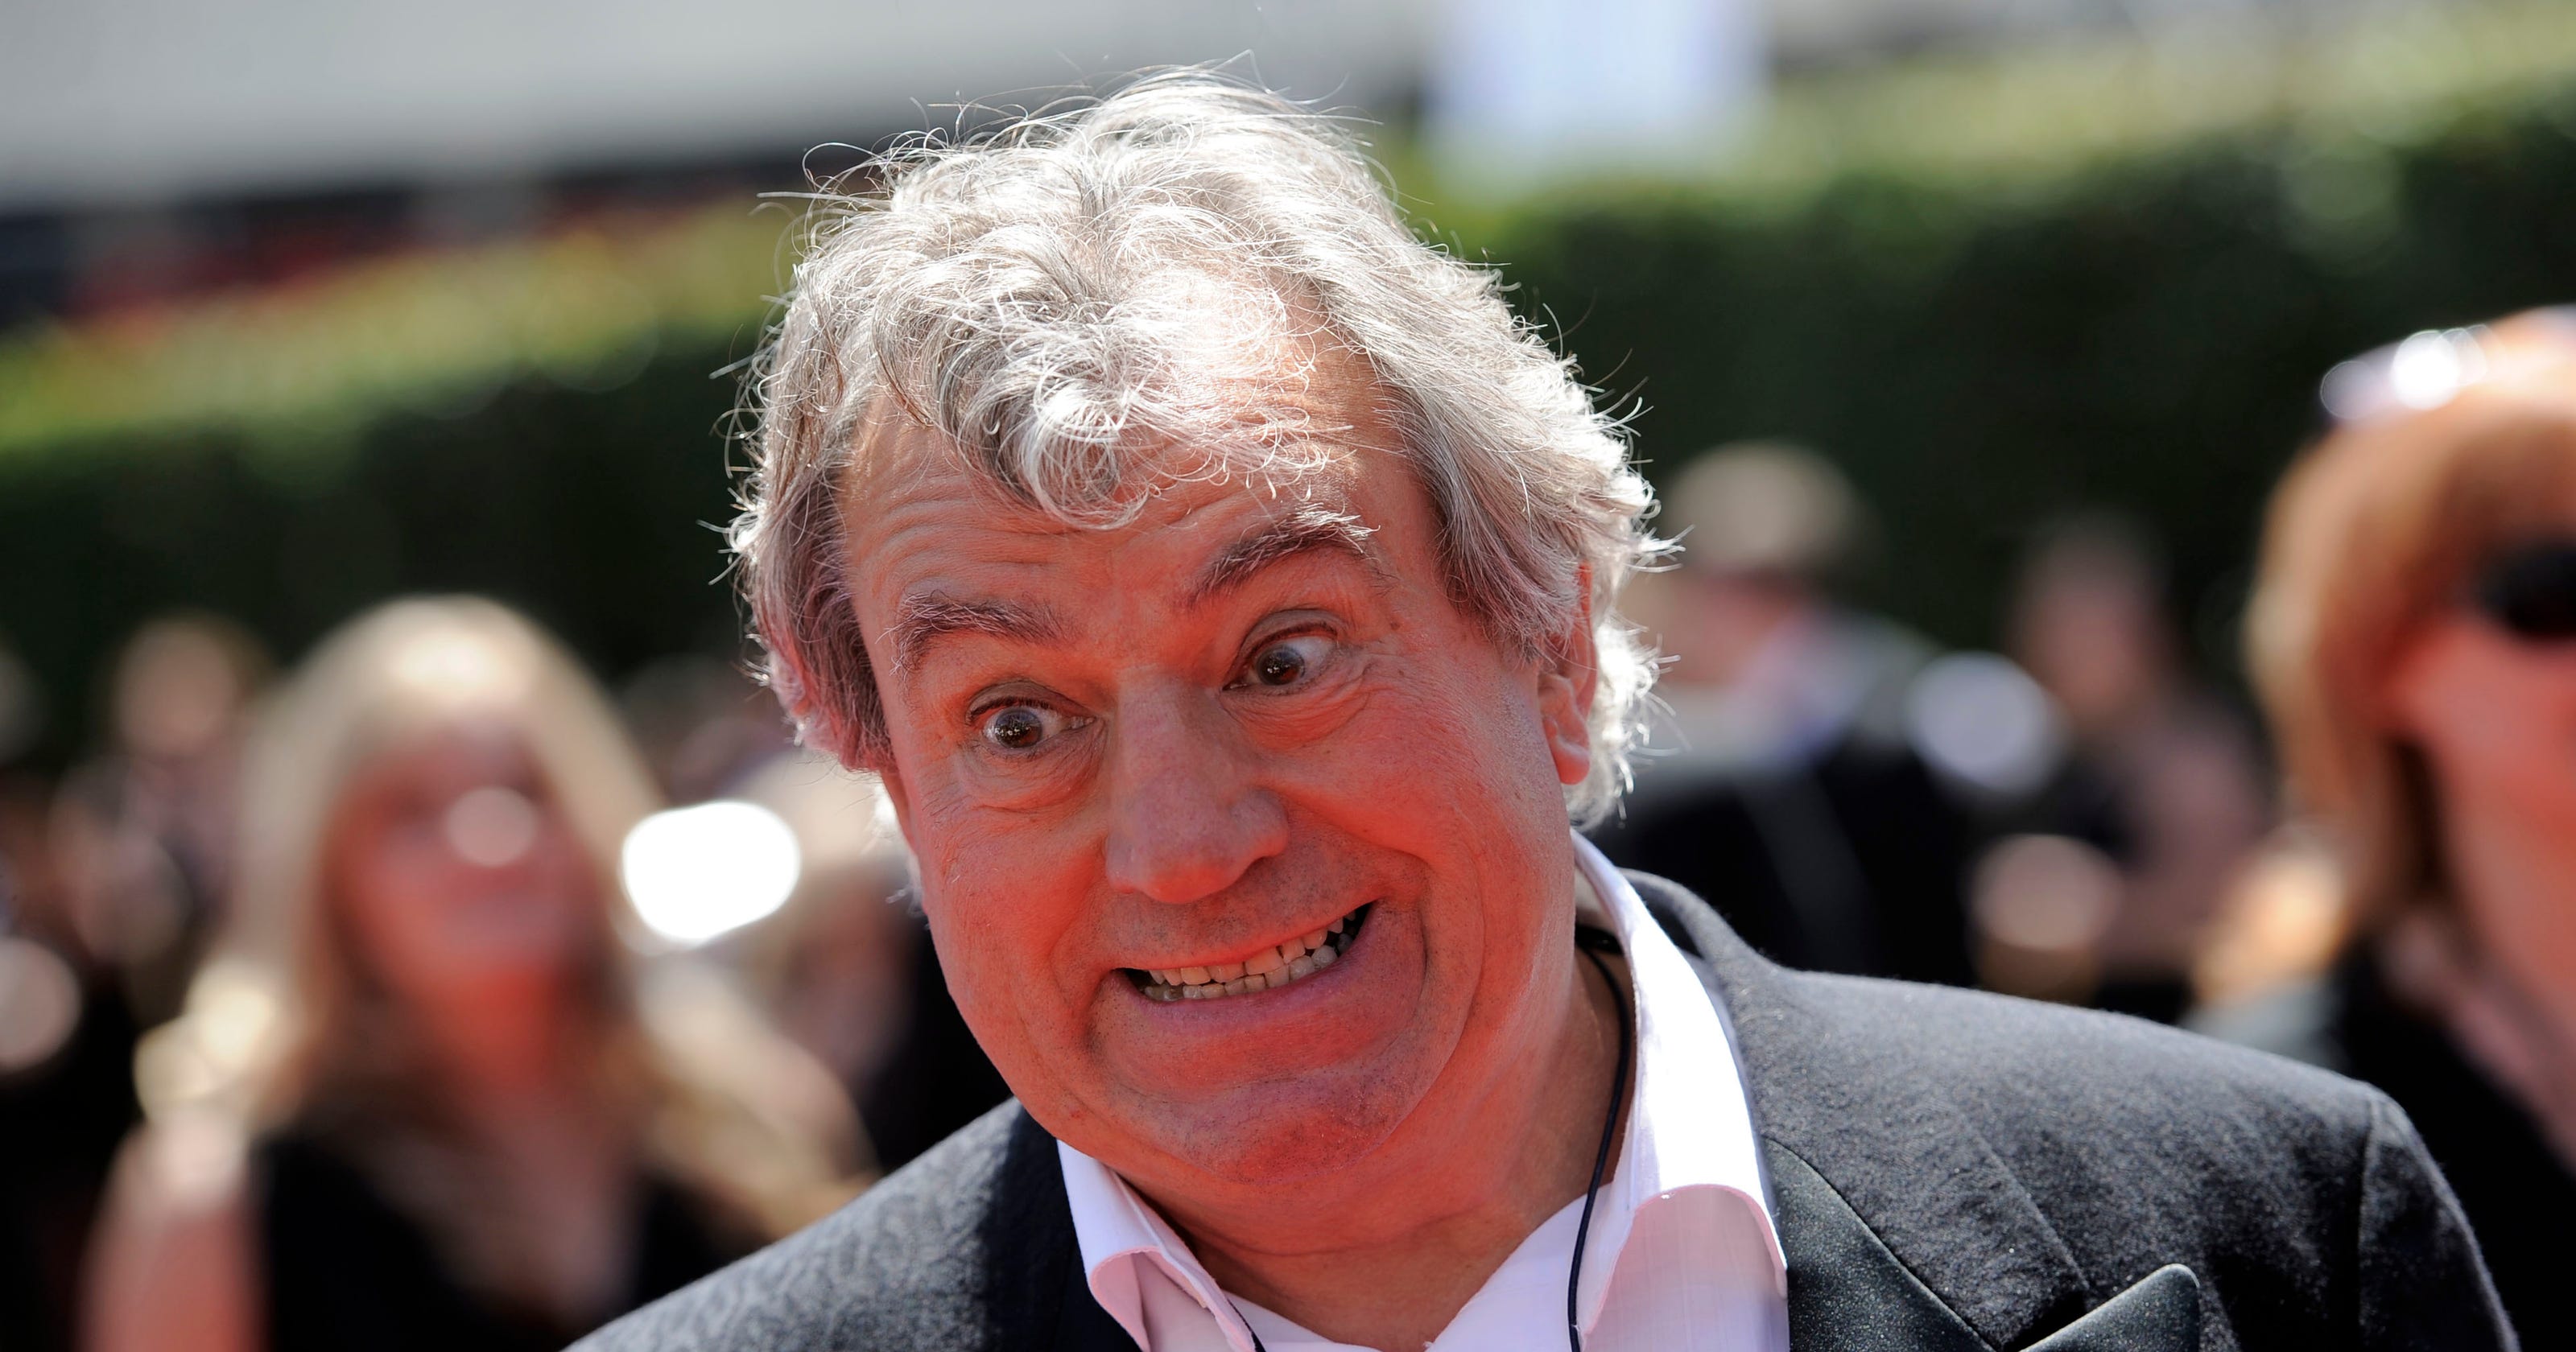 Monty Python's Terry Jones diagnosed with dementia3200 x 1680